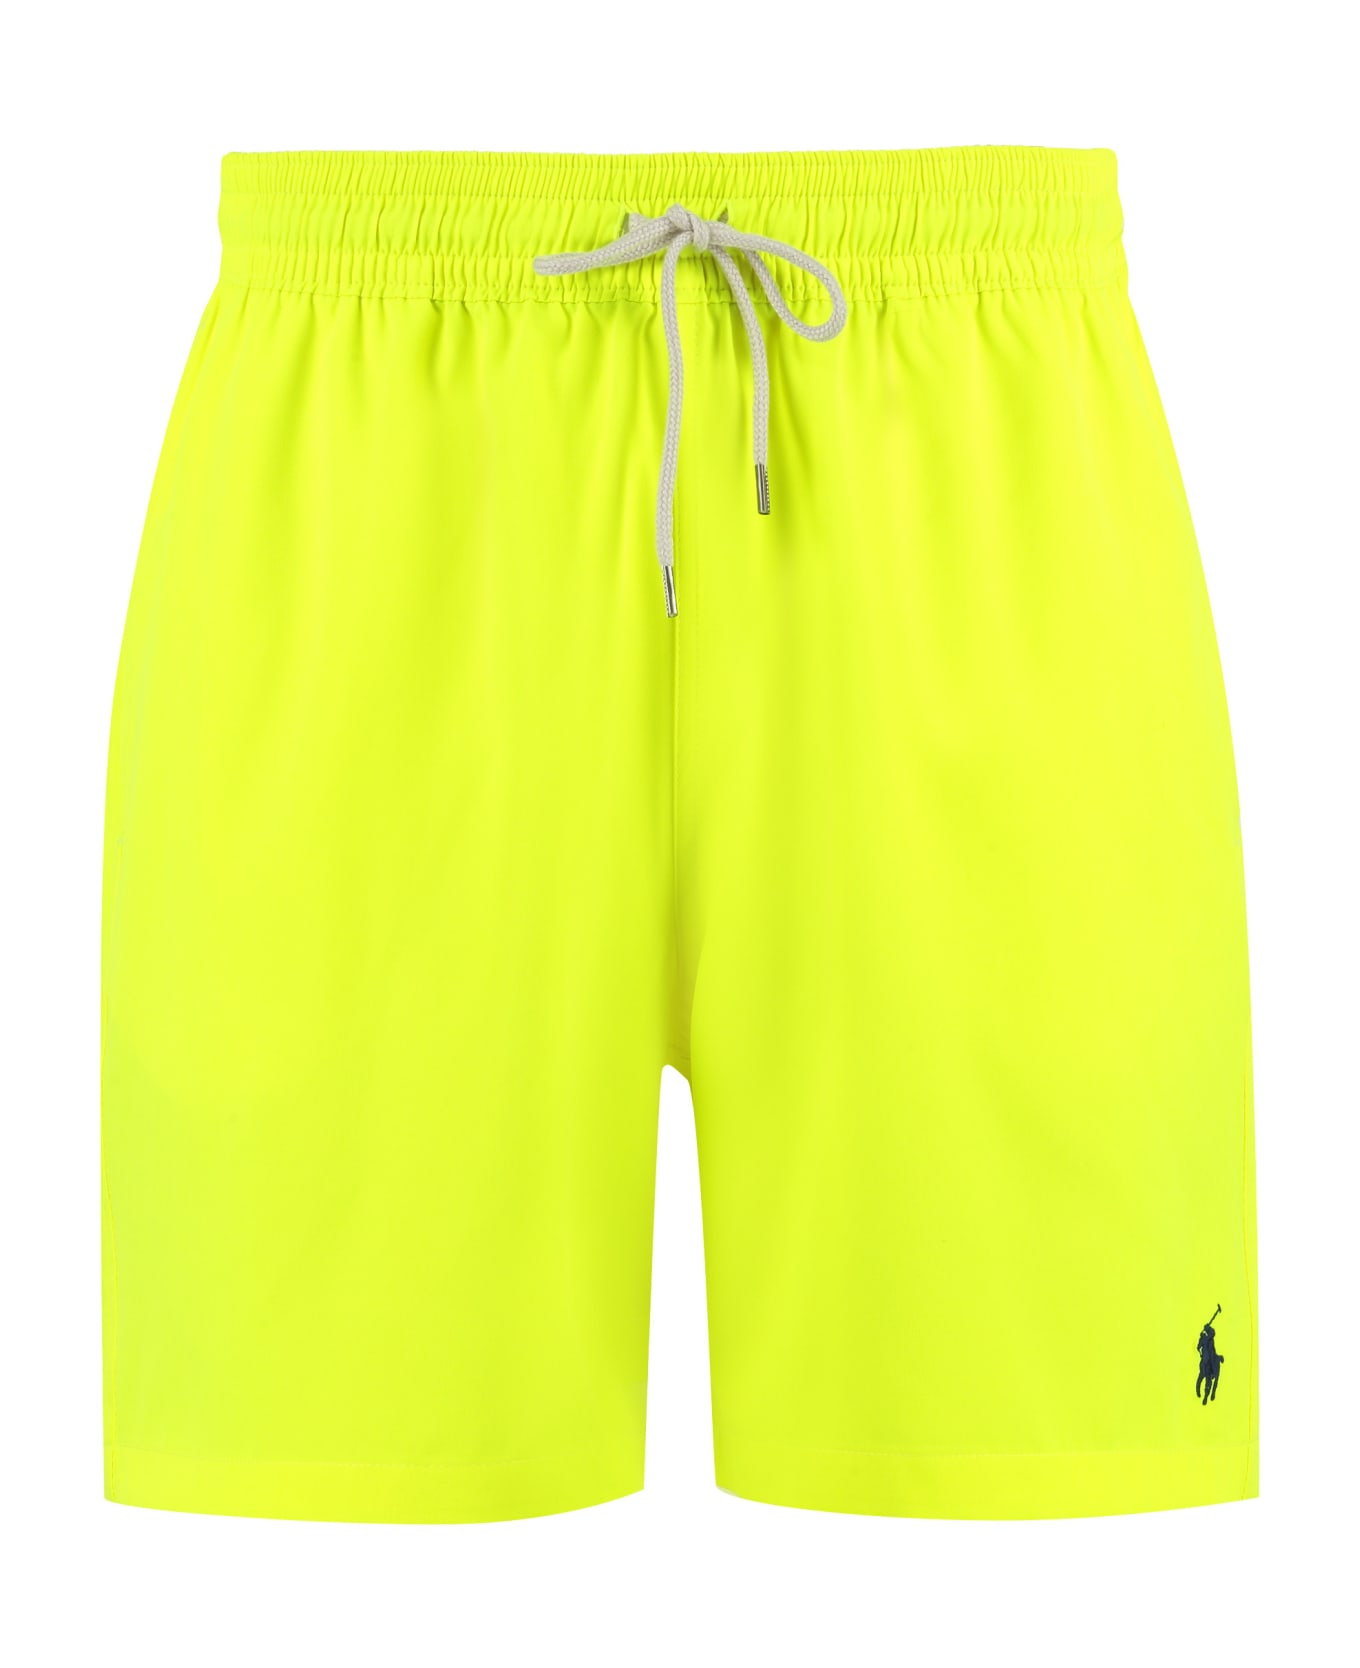 Polo Ralph Lauren Swim Shorts - Yellow